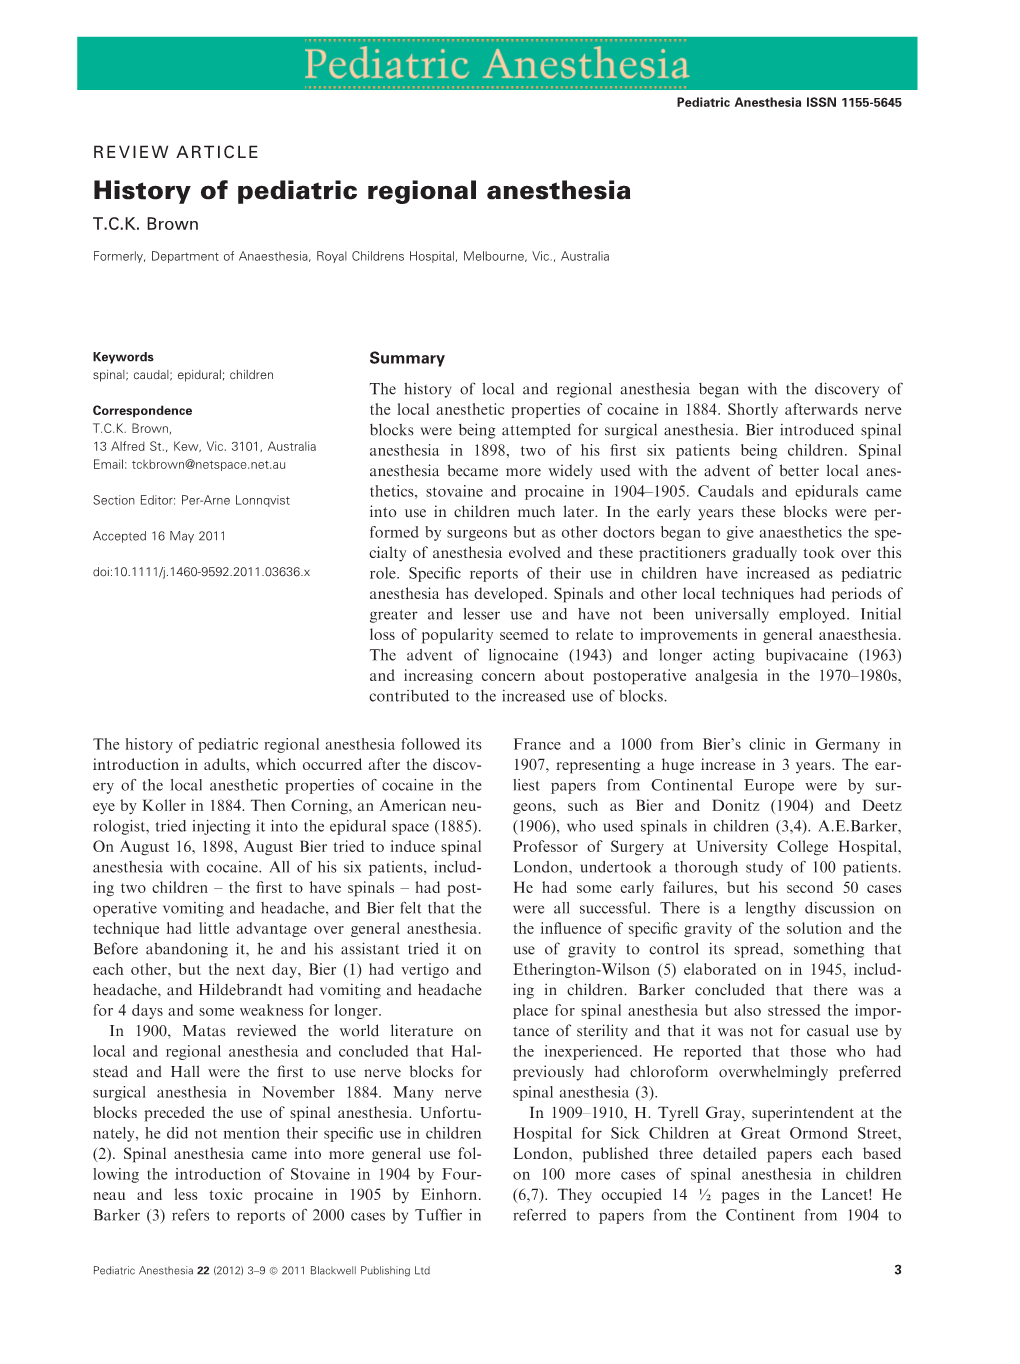 History of Pediatric Regional Anesthesia T.C.K